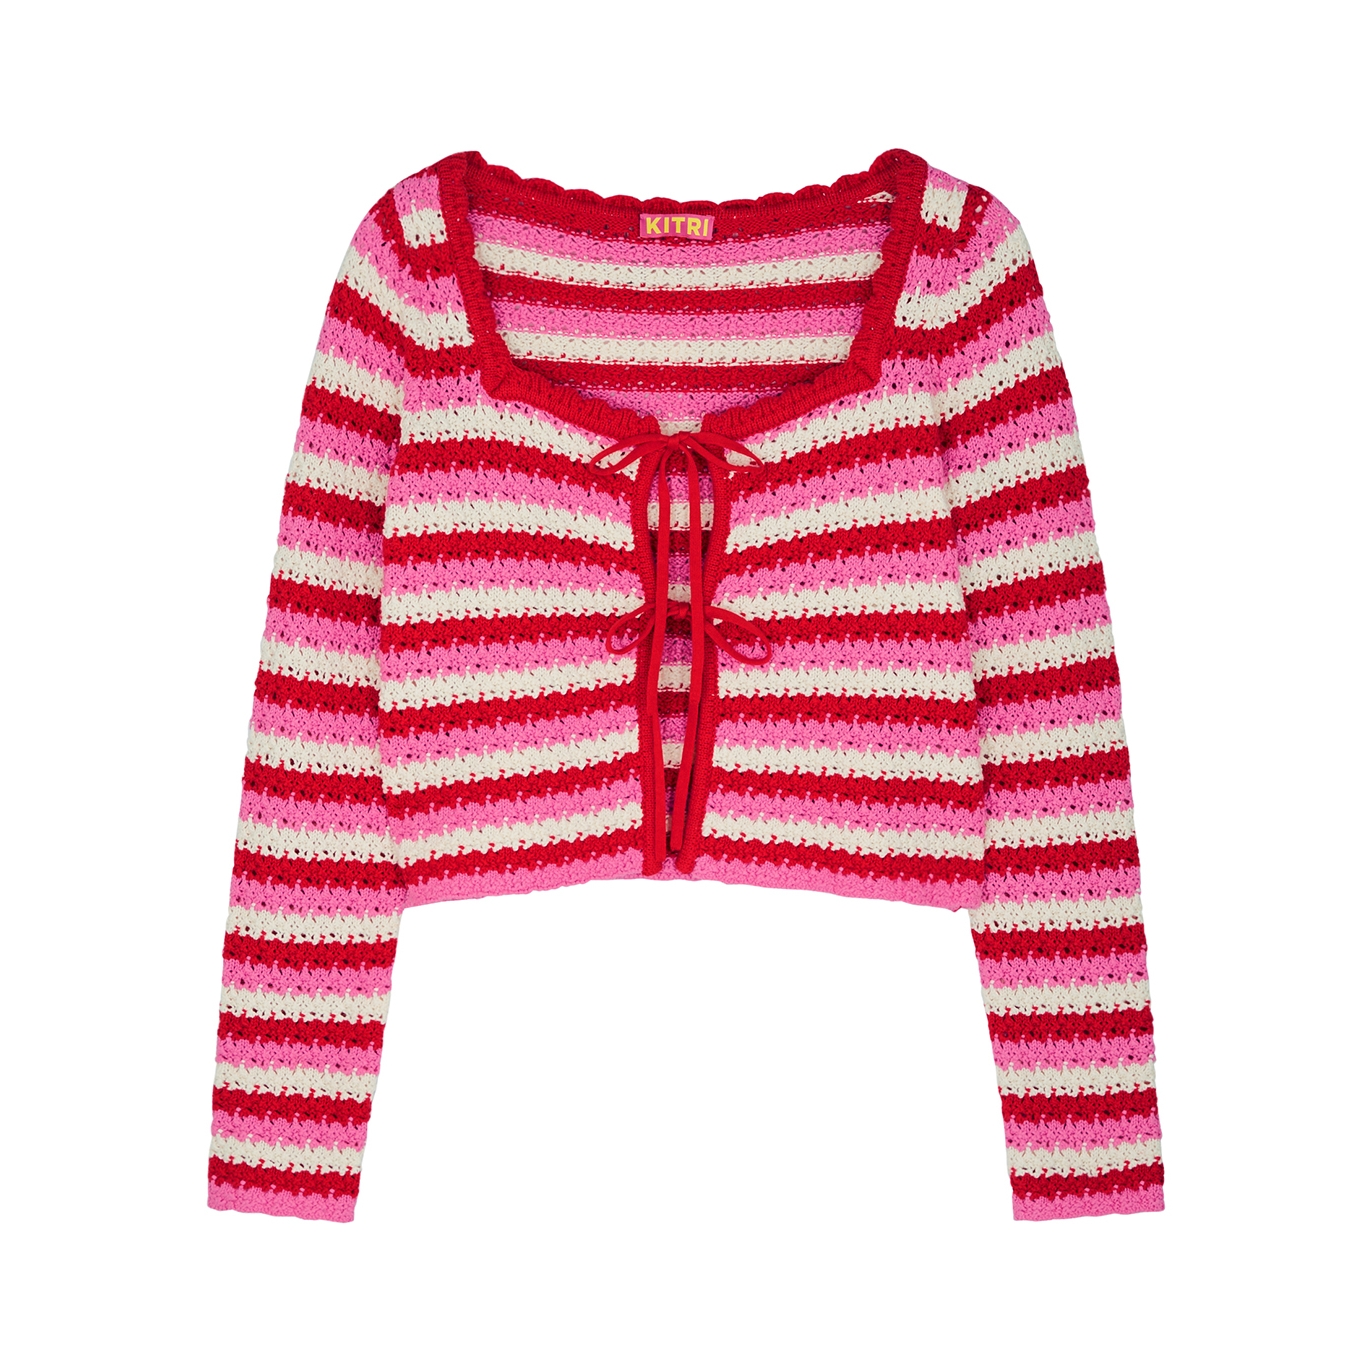 Kitri Dionne Striped Crochet Cardigan